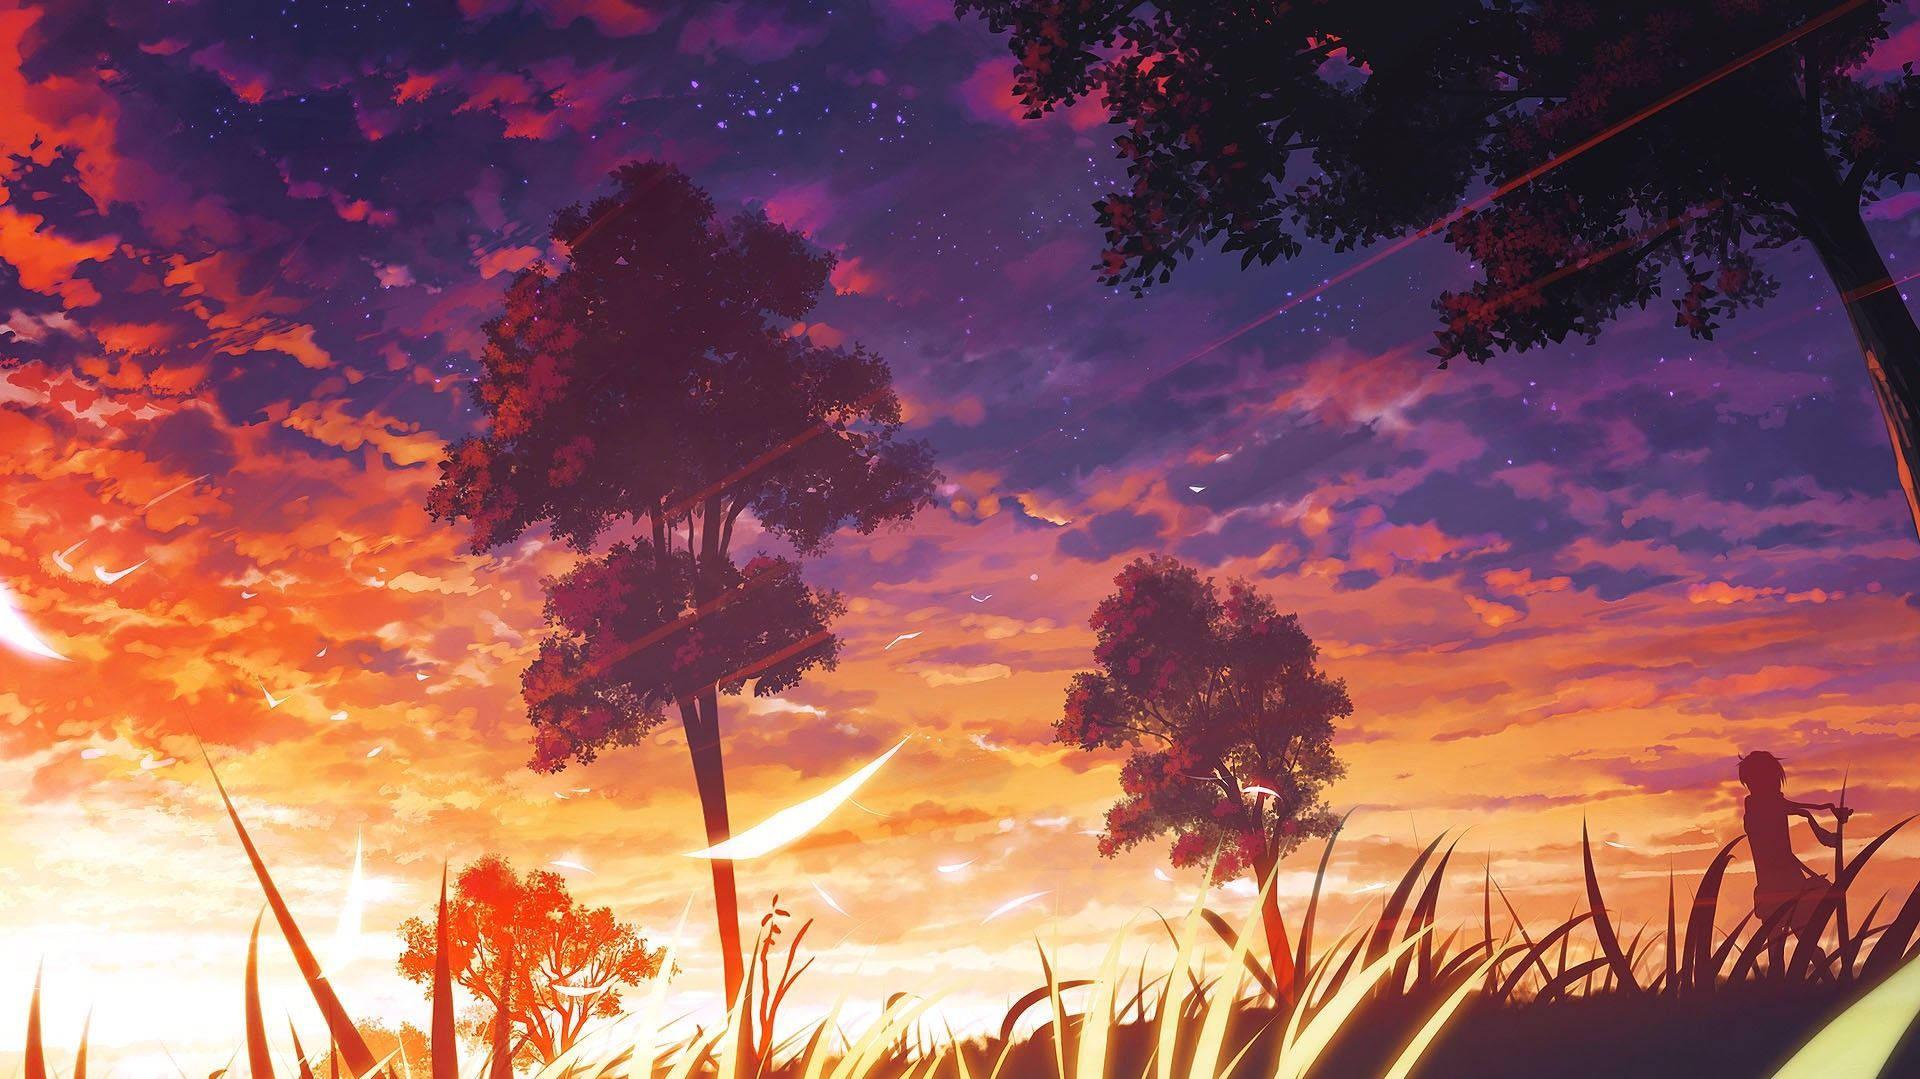 Anime Landscapes 1920x1080 Wallpapers  Landscape wallpaper Anime scenery Anime  scenery wallpaper